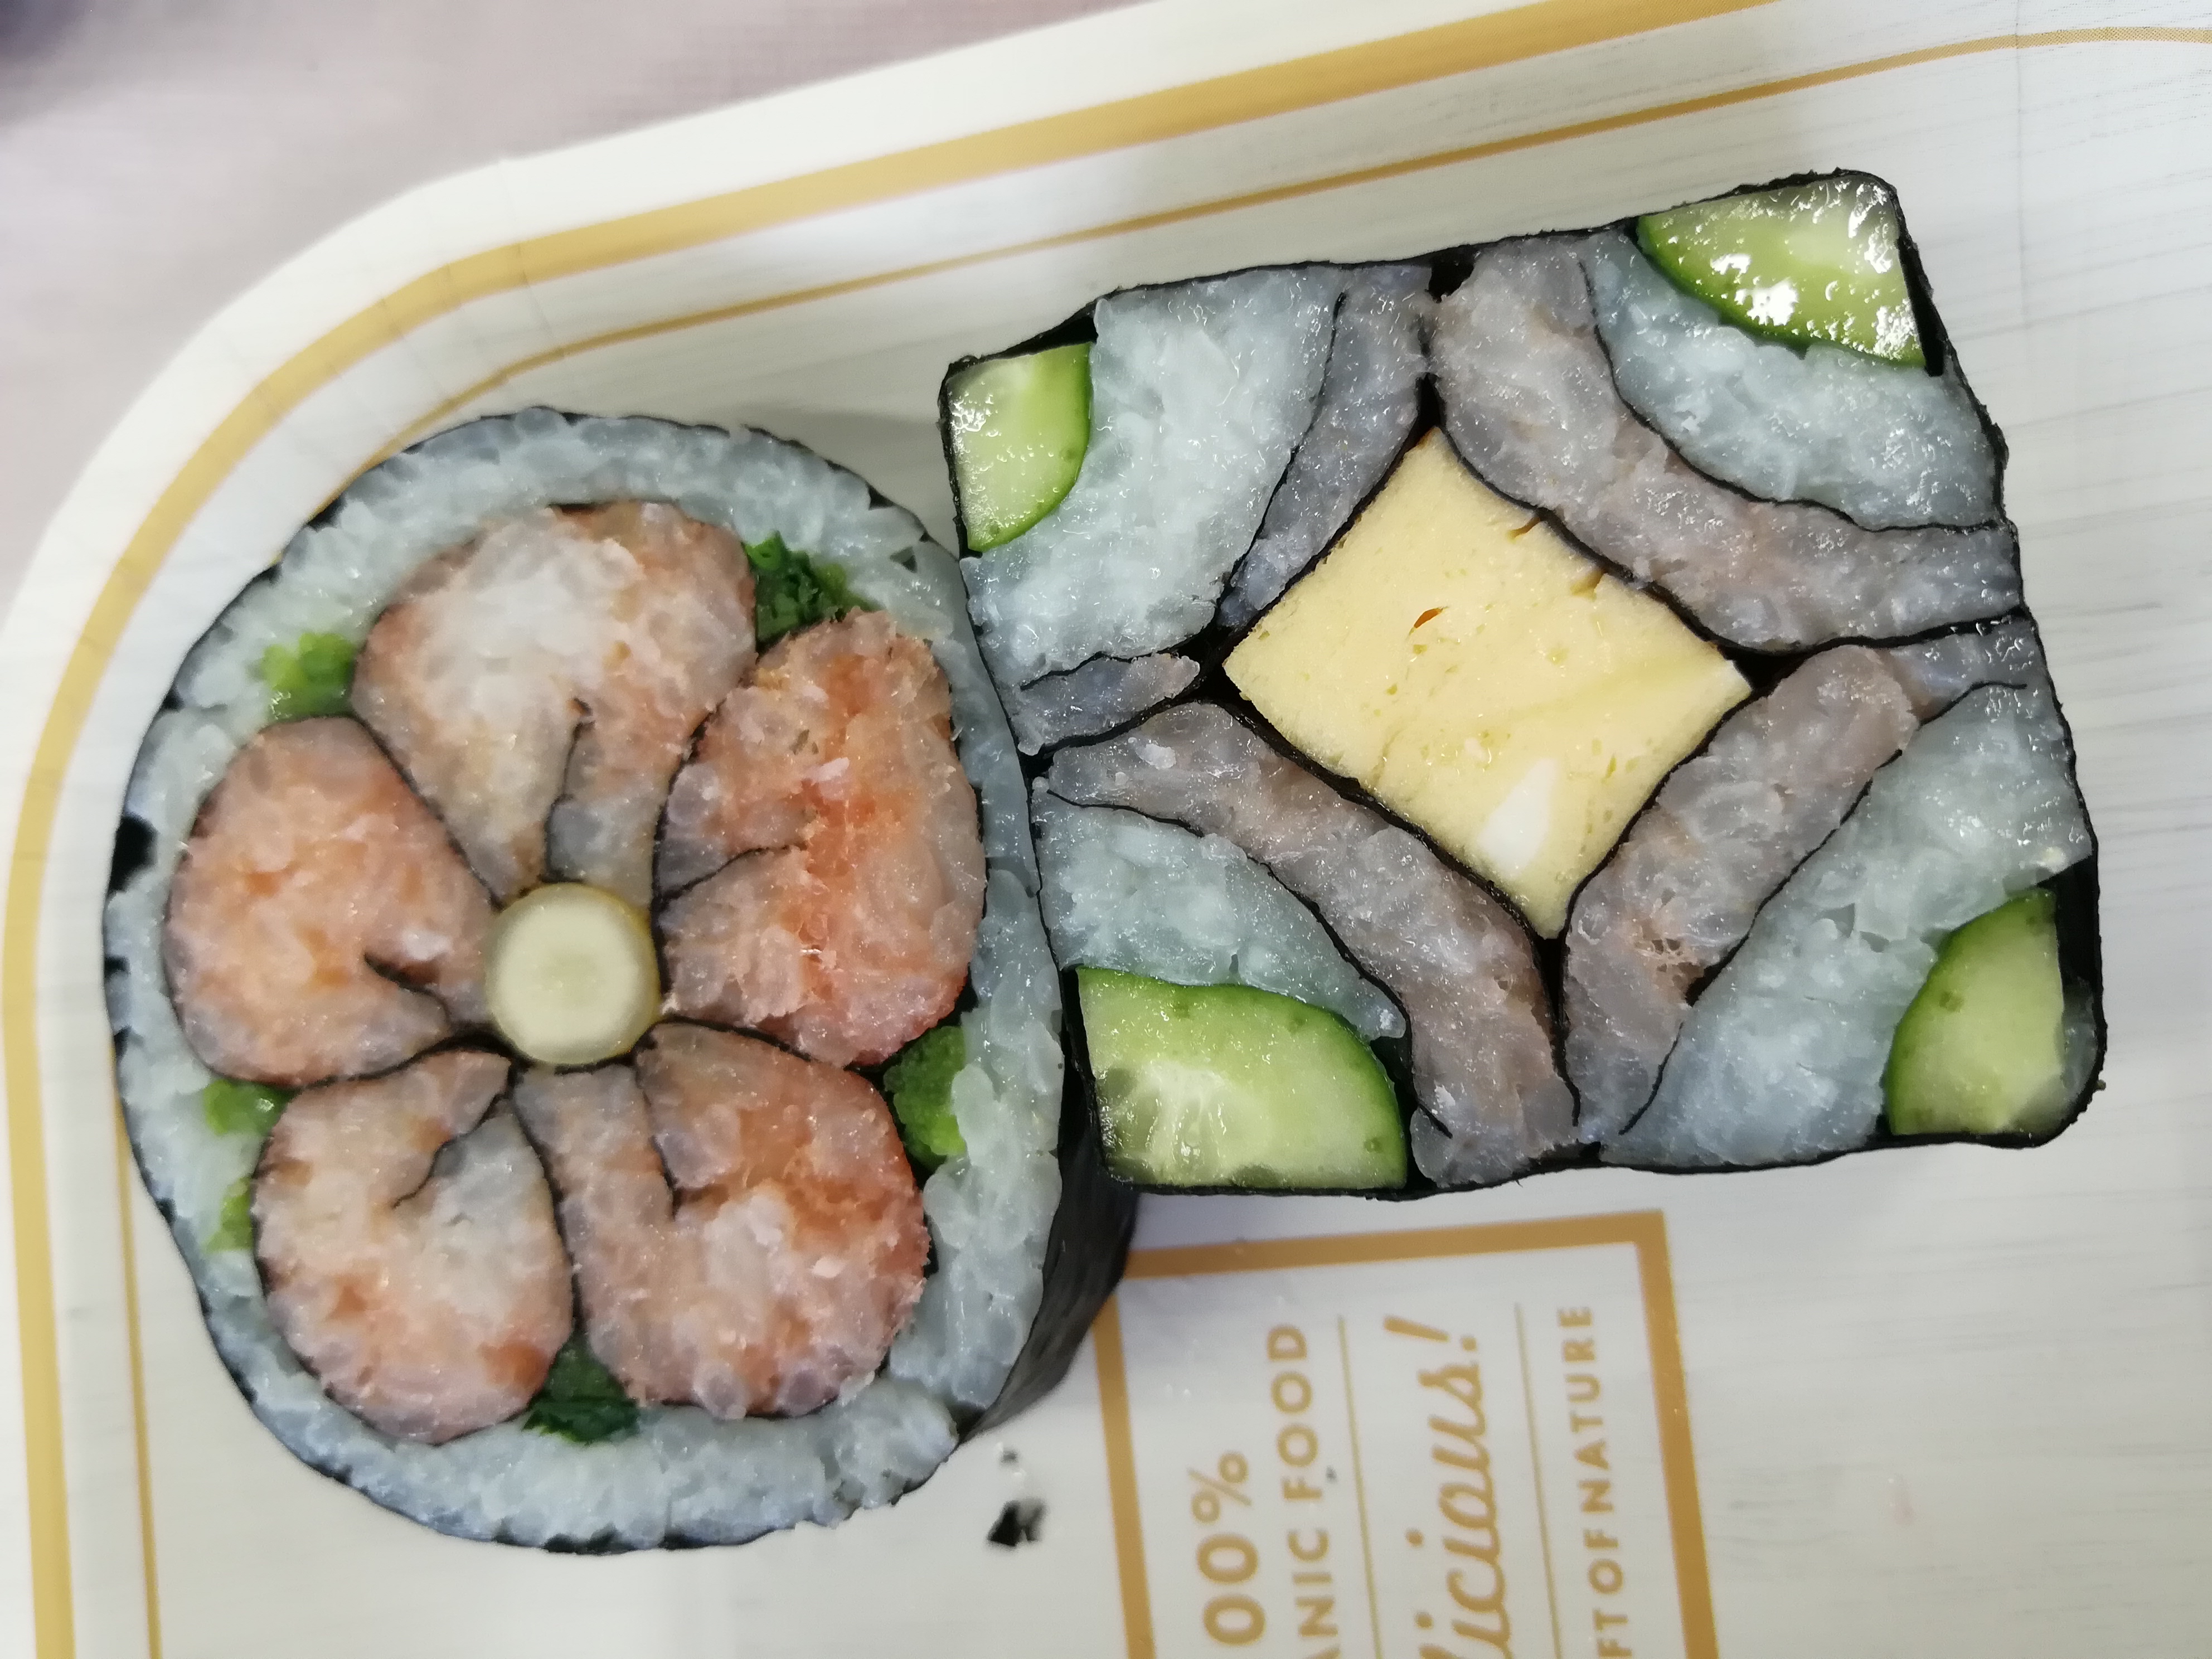 kazari sushi